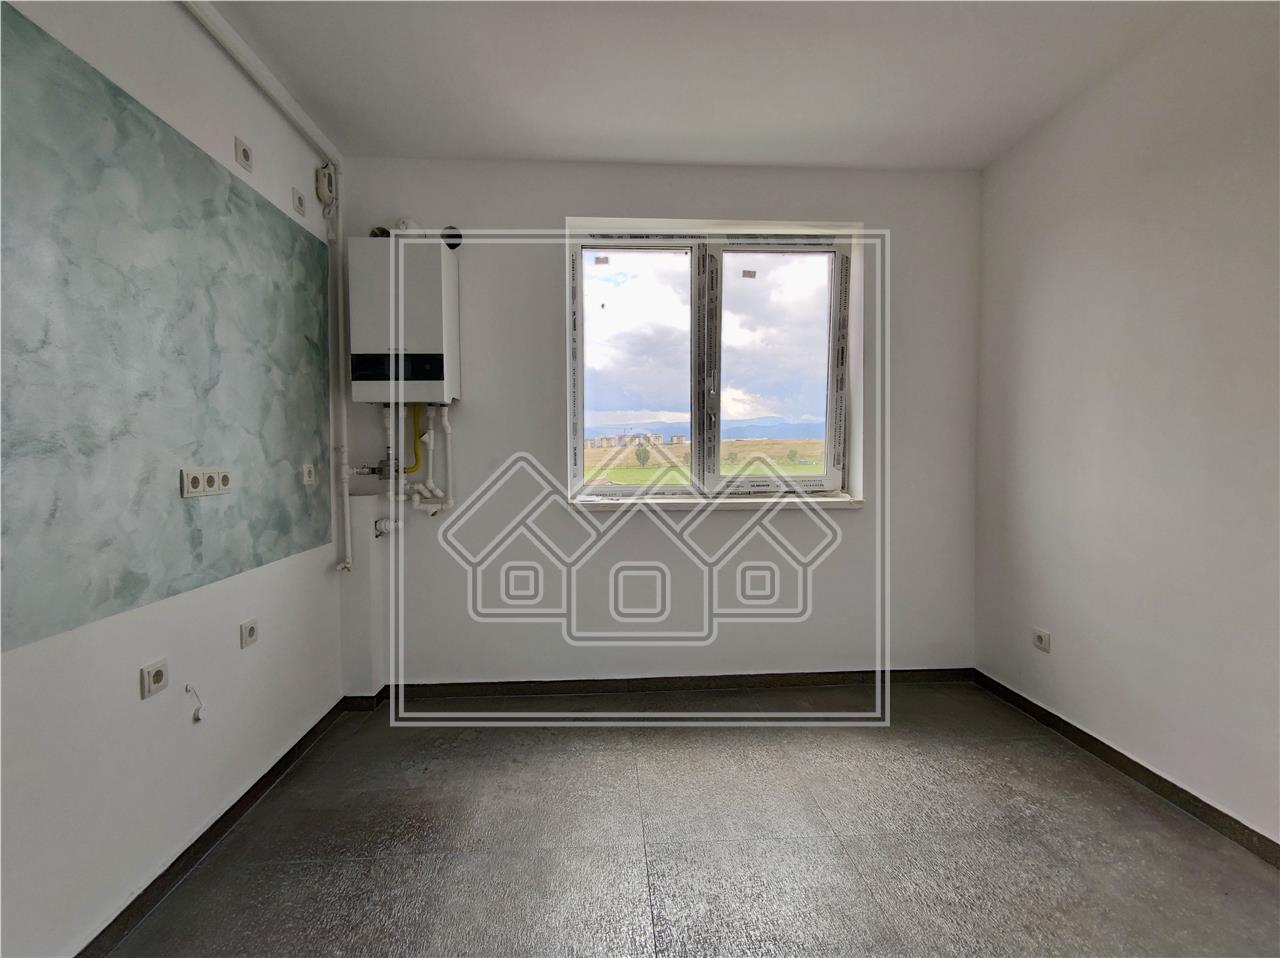 Apartament de inchiriat in Sibiu - 3 camere, LA CHEIE, nou, et 2